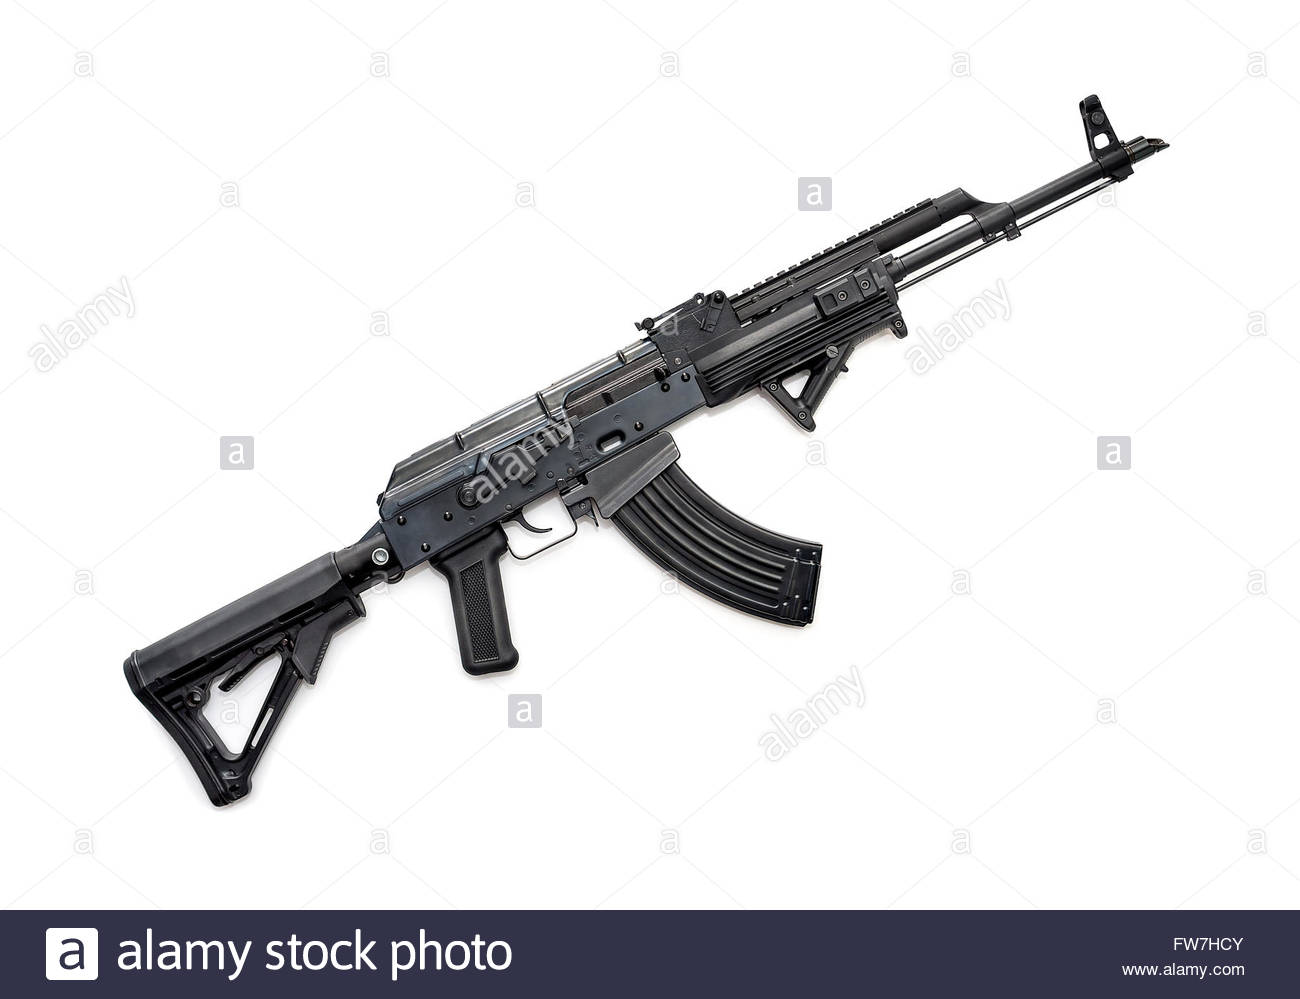 Tactical Custom Built Ak Rifle On White Background Stock Photo